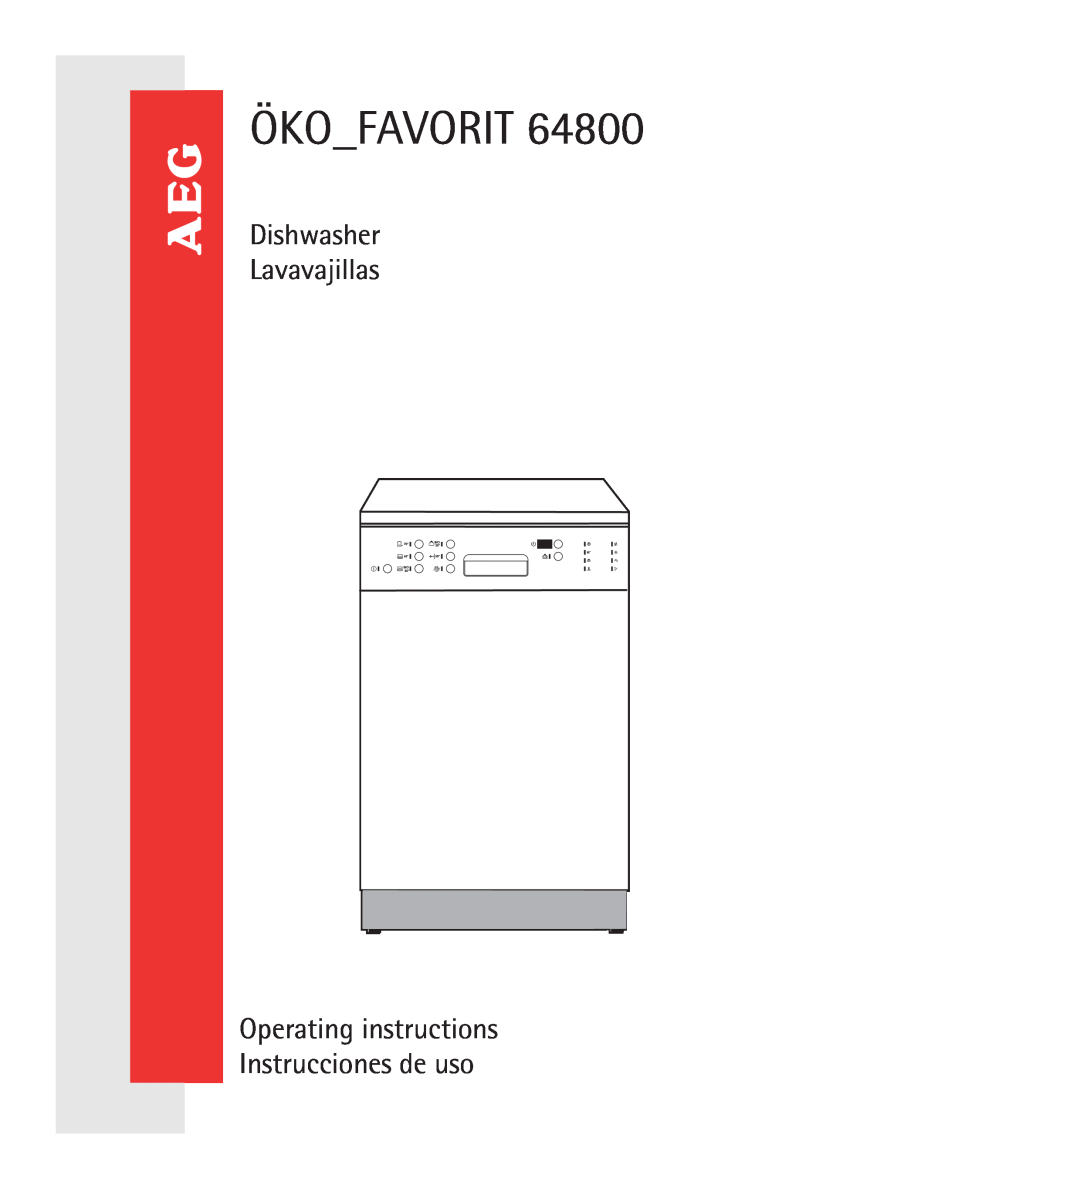 AEG 64800 manual Ökofavorit, Operating instructions Instrucciones de uso, Dishwasher Lavavajillas 